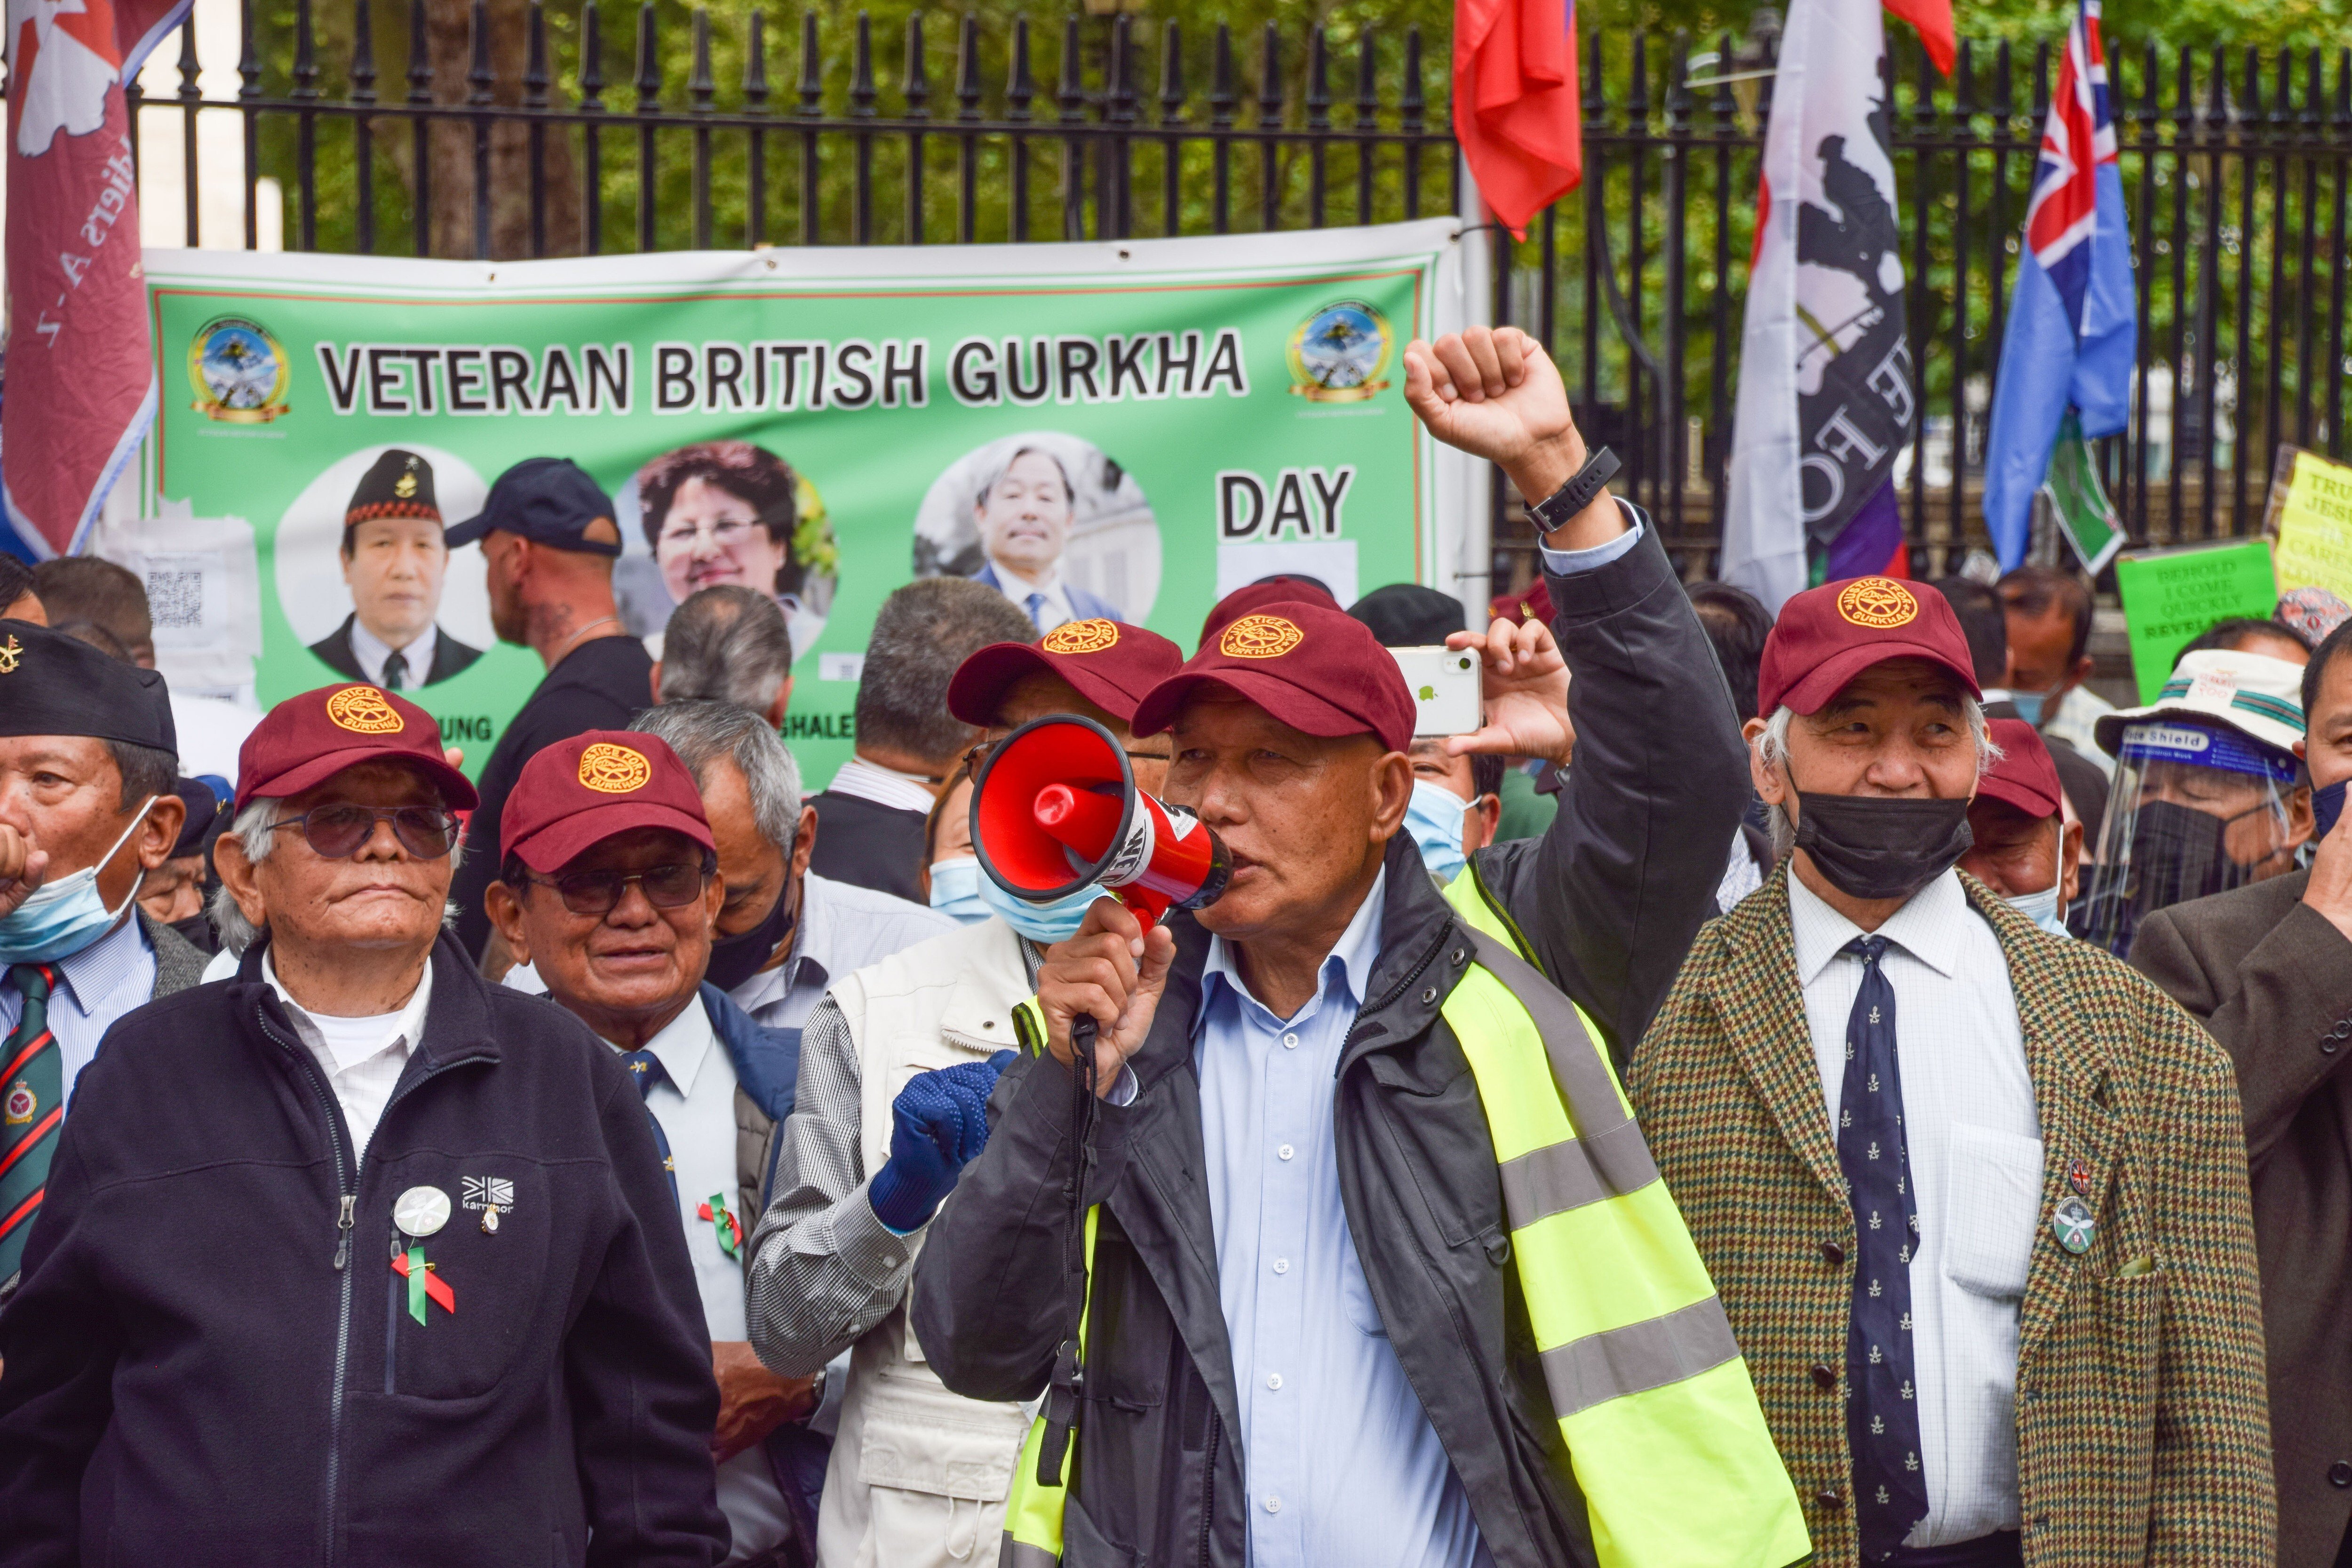 A Gurkha veteran speaks through a megaphone during a protest outside 10 Downing Street. Photo: Handout